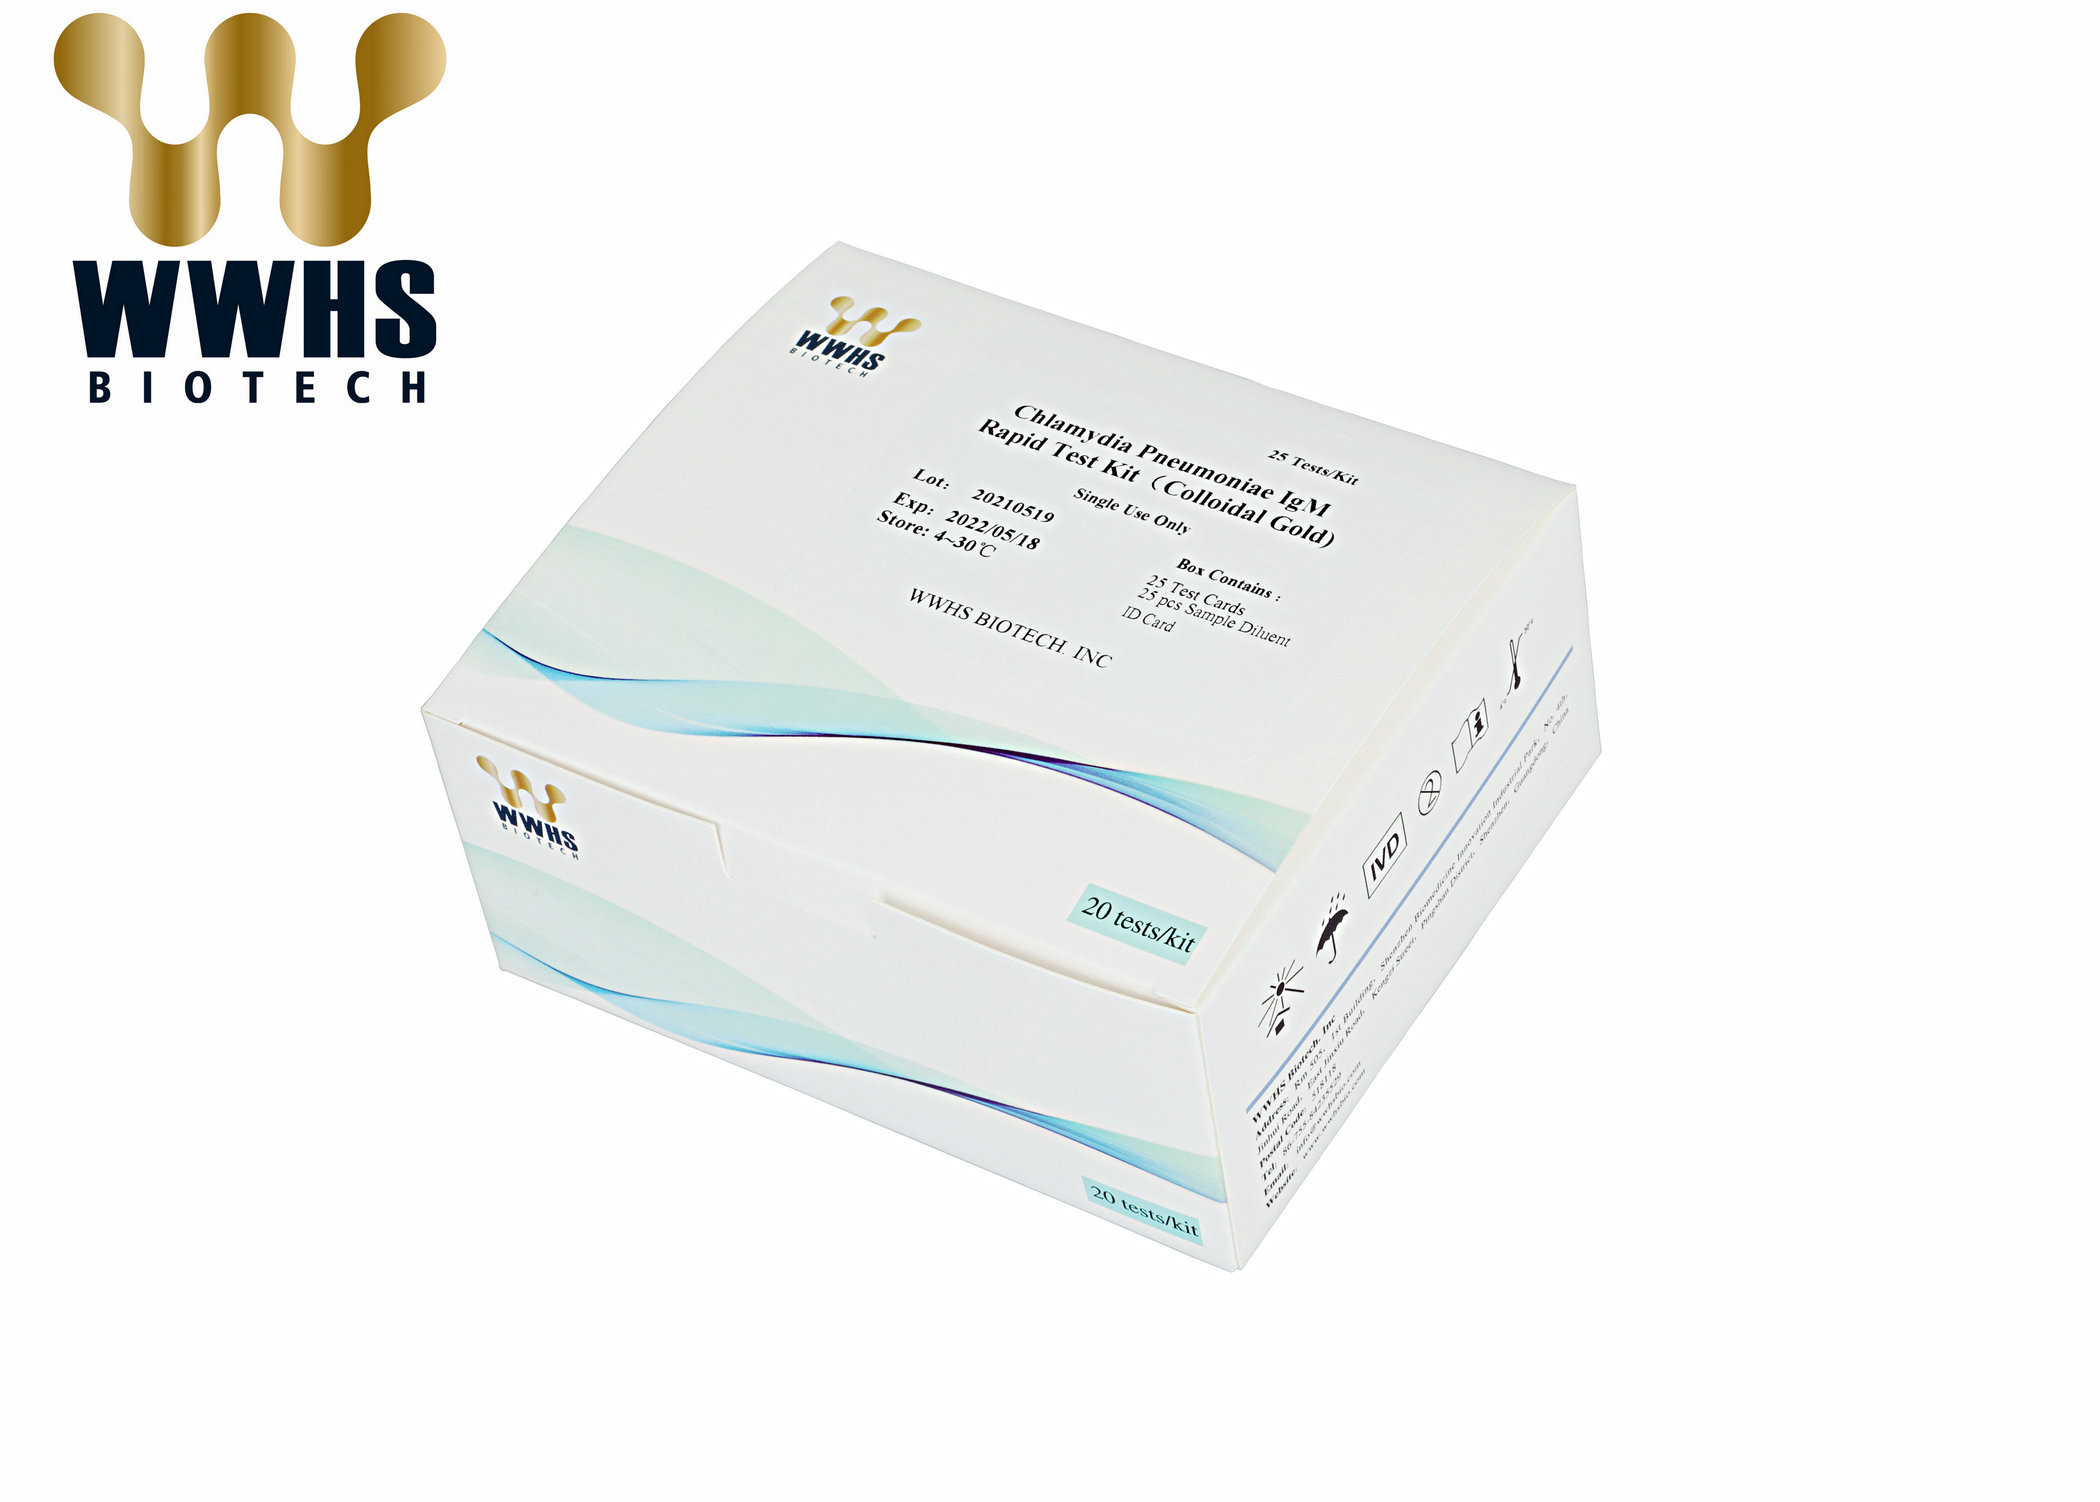 Tecnología de los diagnósticos de la Ancho-gama de C.Pneumonia IVD FIA Rapid Quantitative Test Kit WWHS